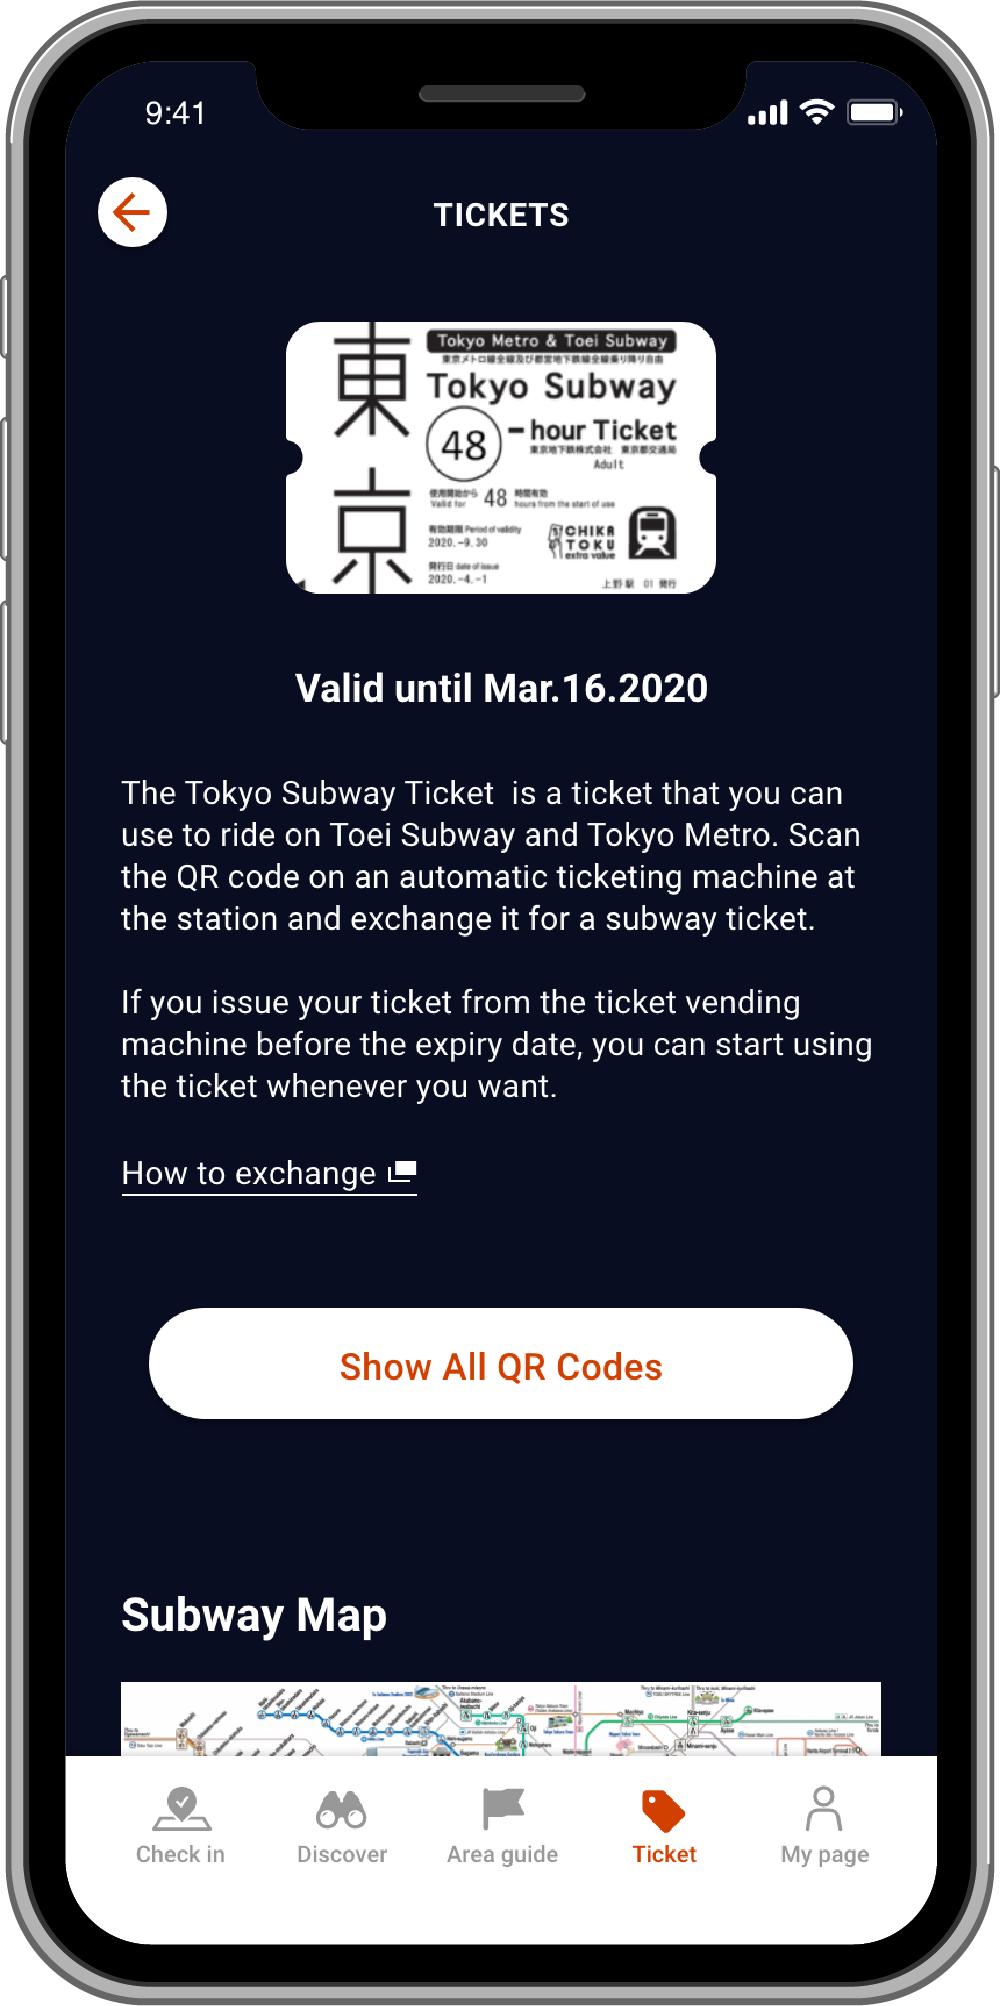 tokyo pass for tourist